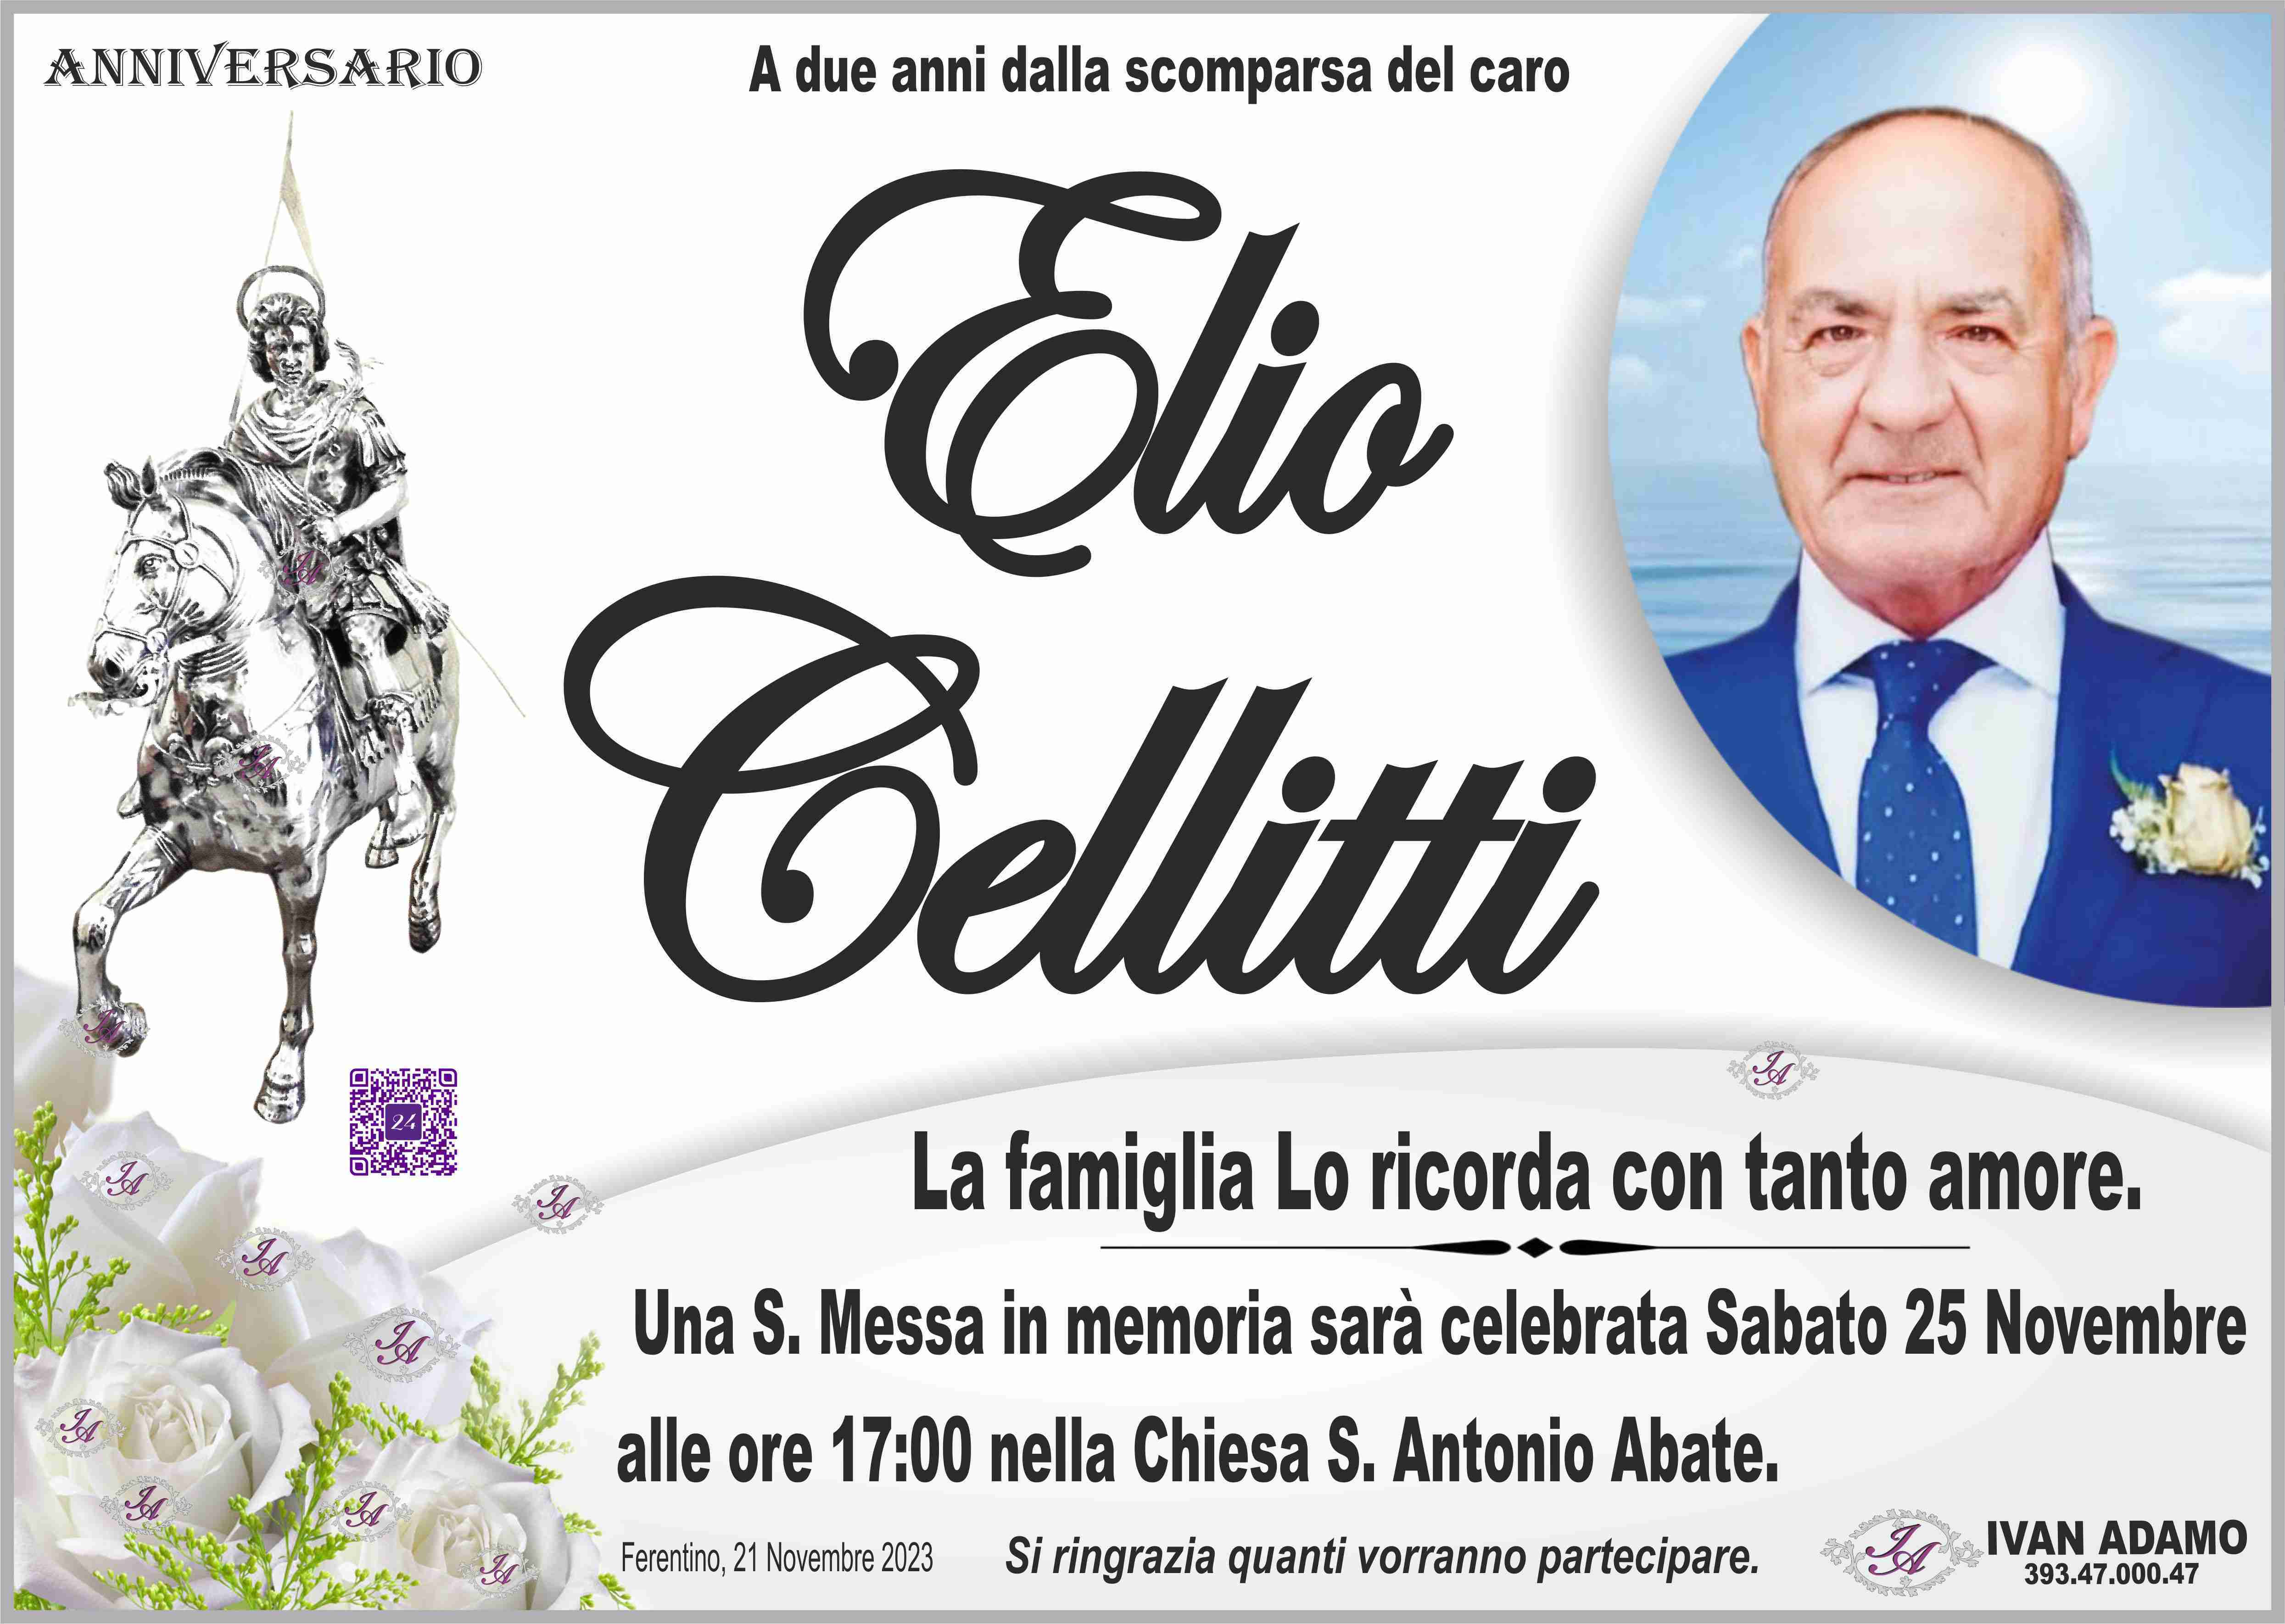 Elio Cellitti